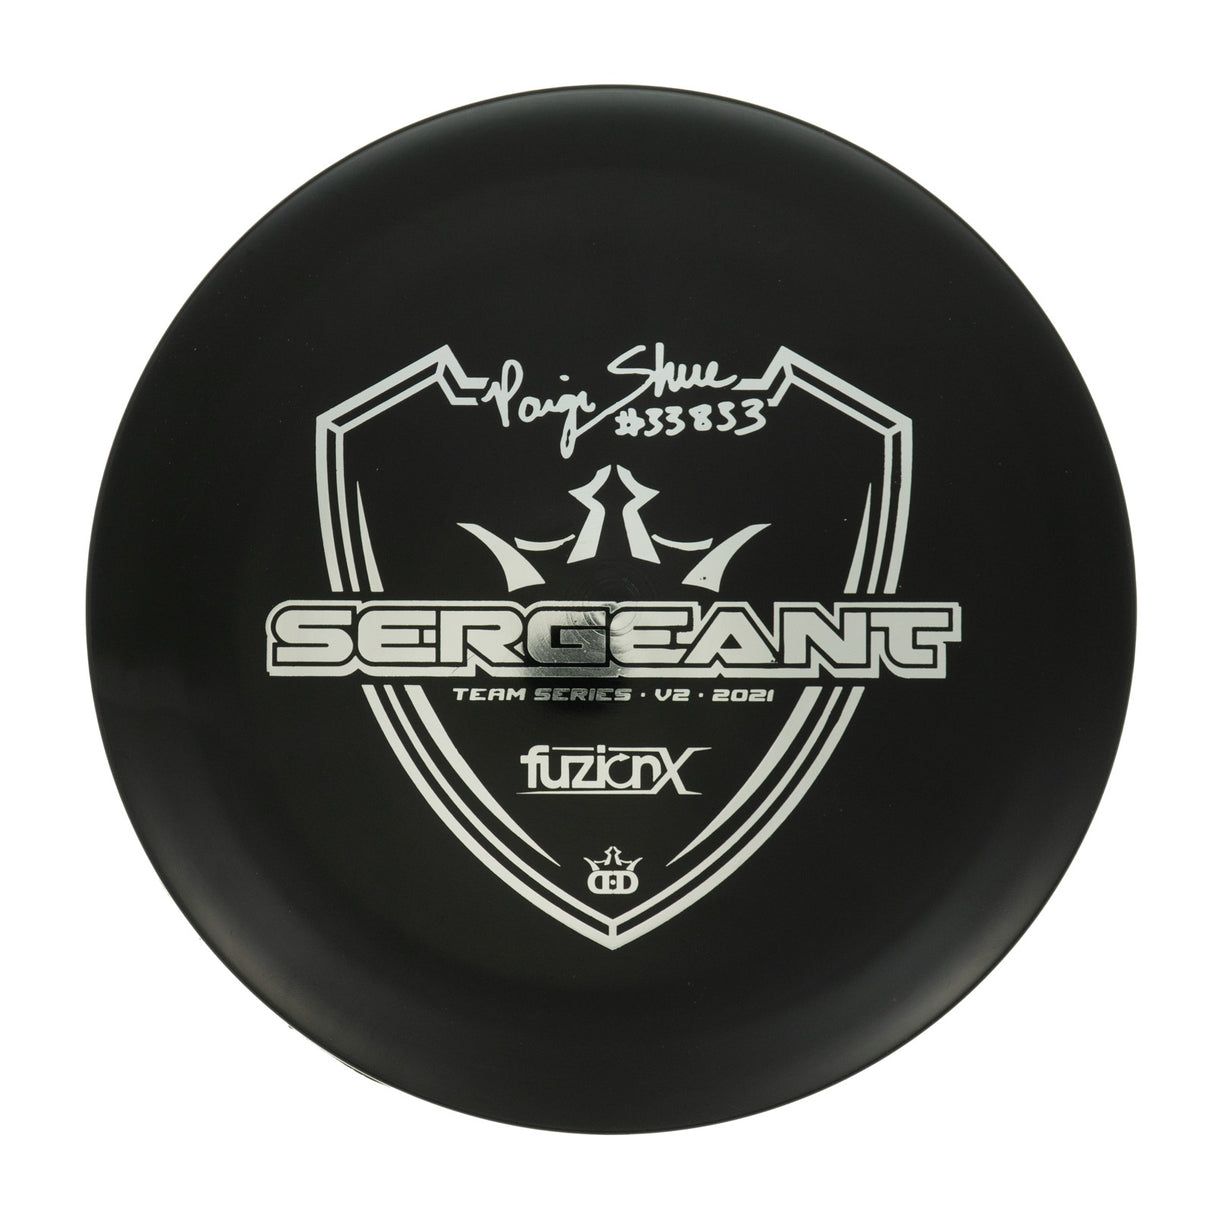 Dynamic Discs Sergeant - Paige Shue 2021 Team Series V2 Fuzion-X 175g | Style 0001